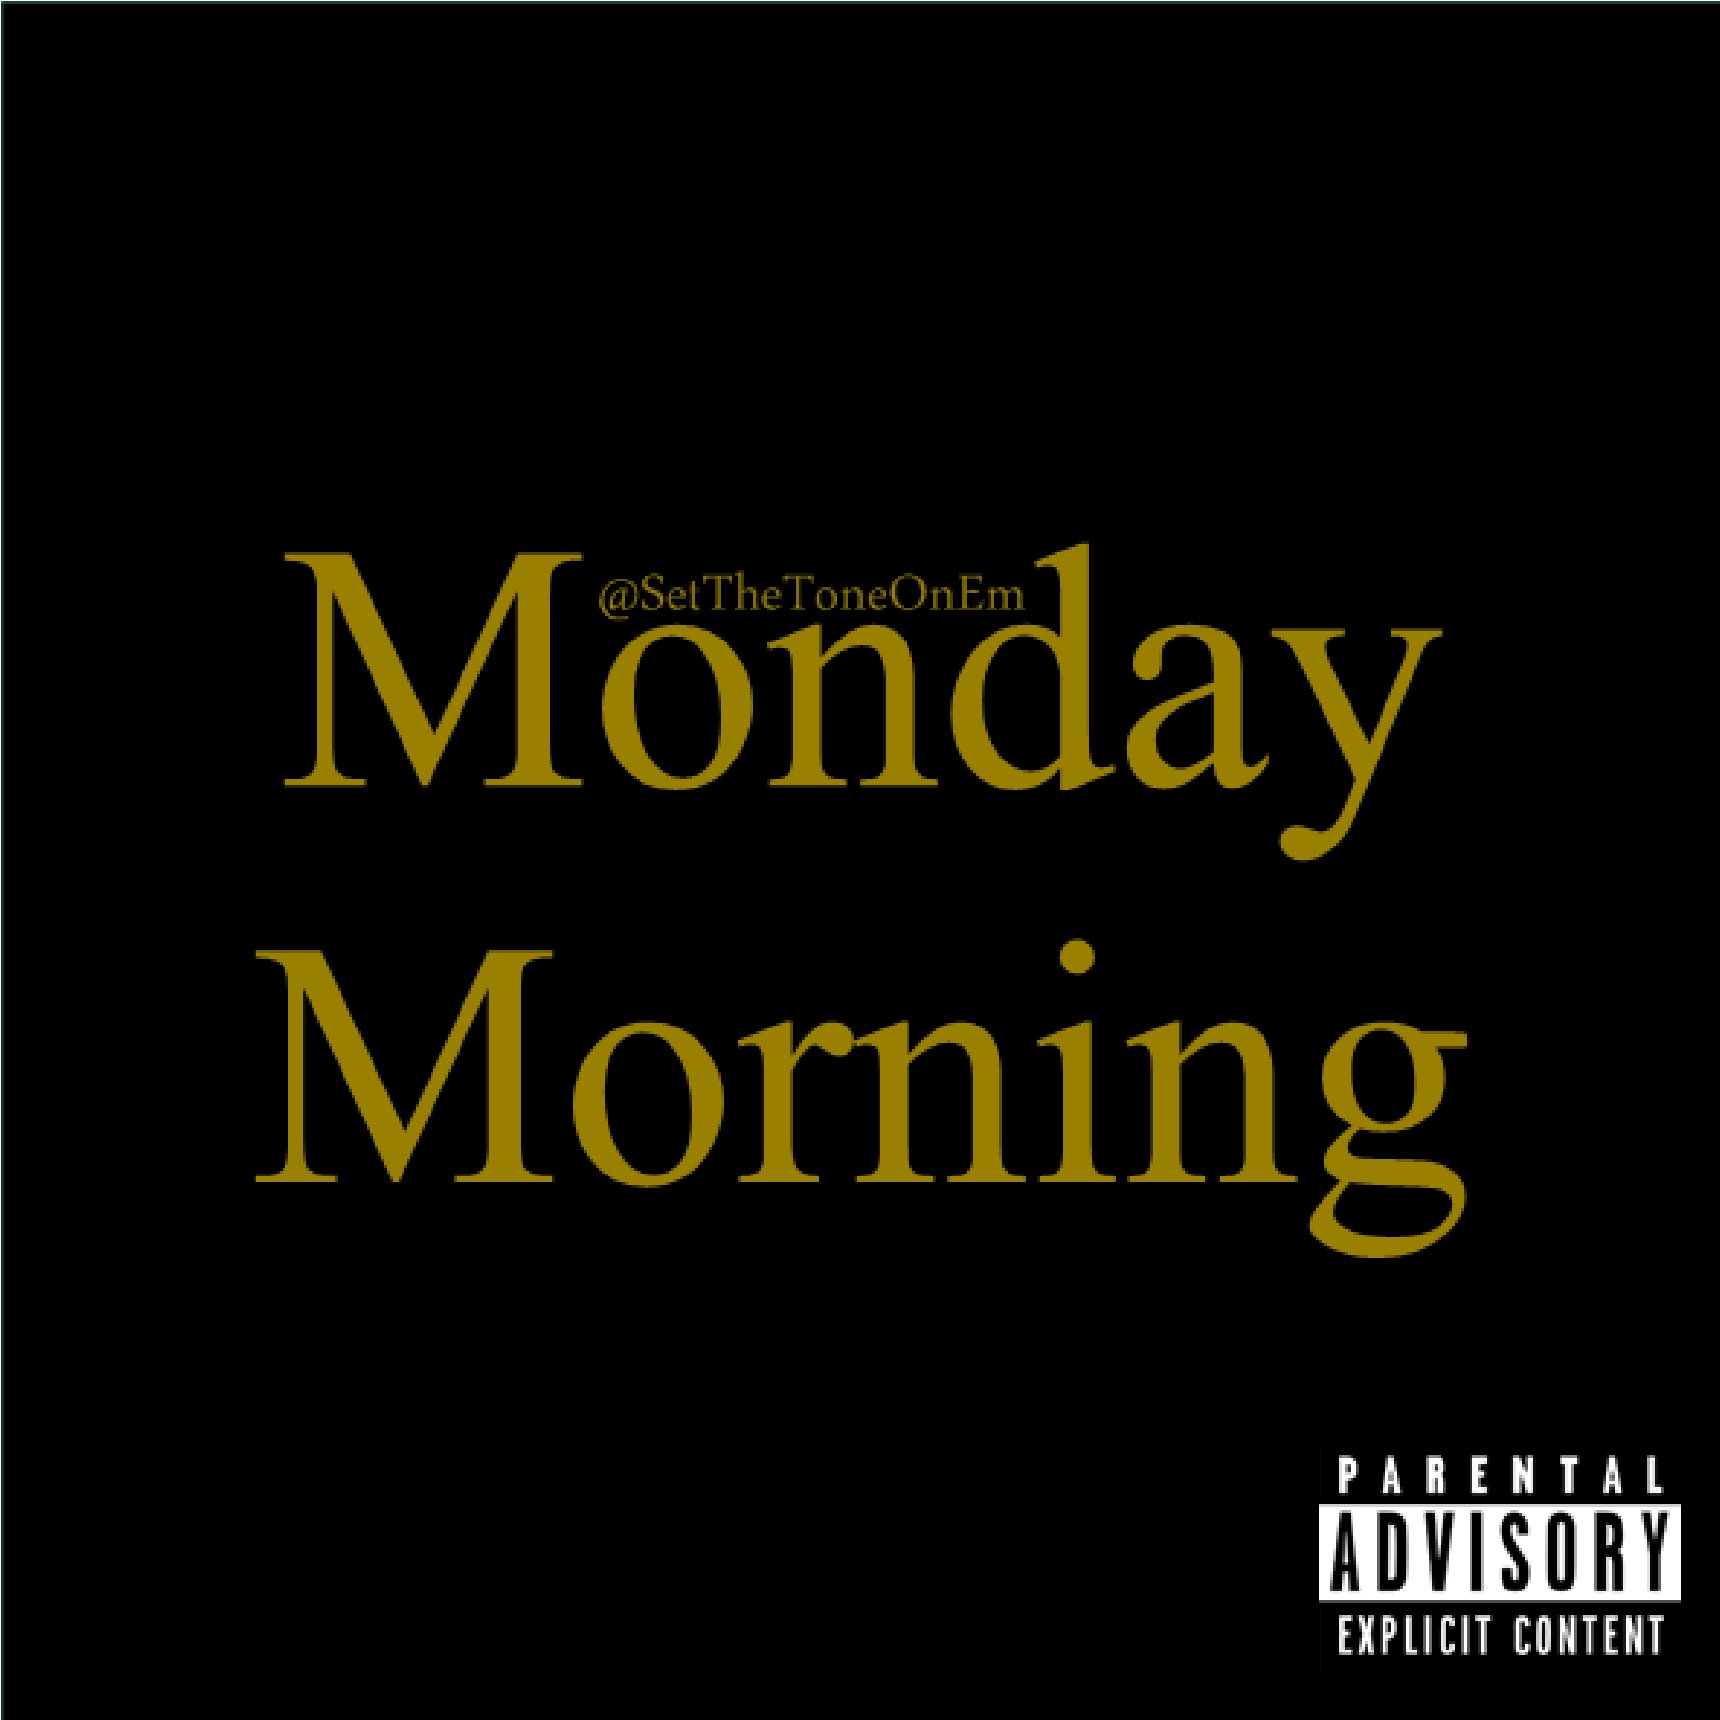 Monday Morning by @setthetoneonem | ReverbNation